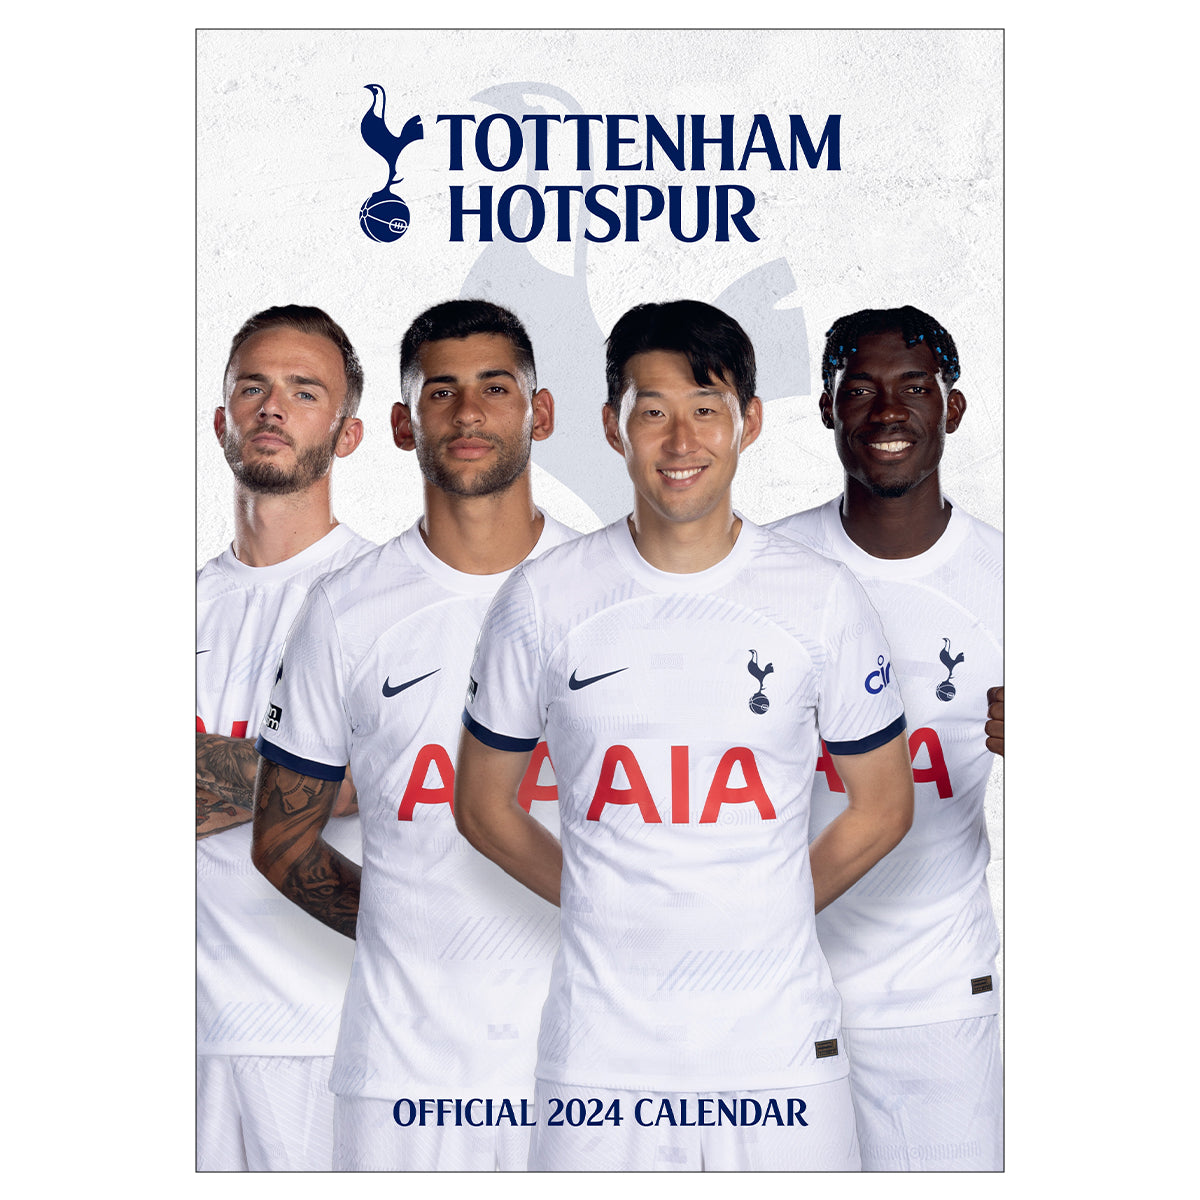 Tottenham Hotspur International Club Soccer Fan Jerseys for sale